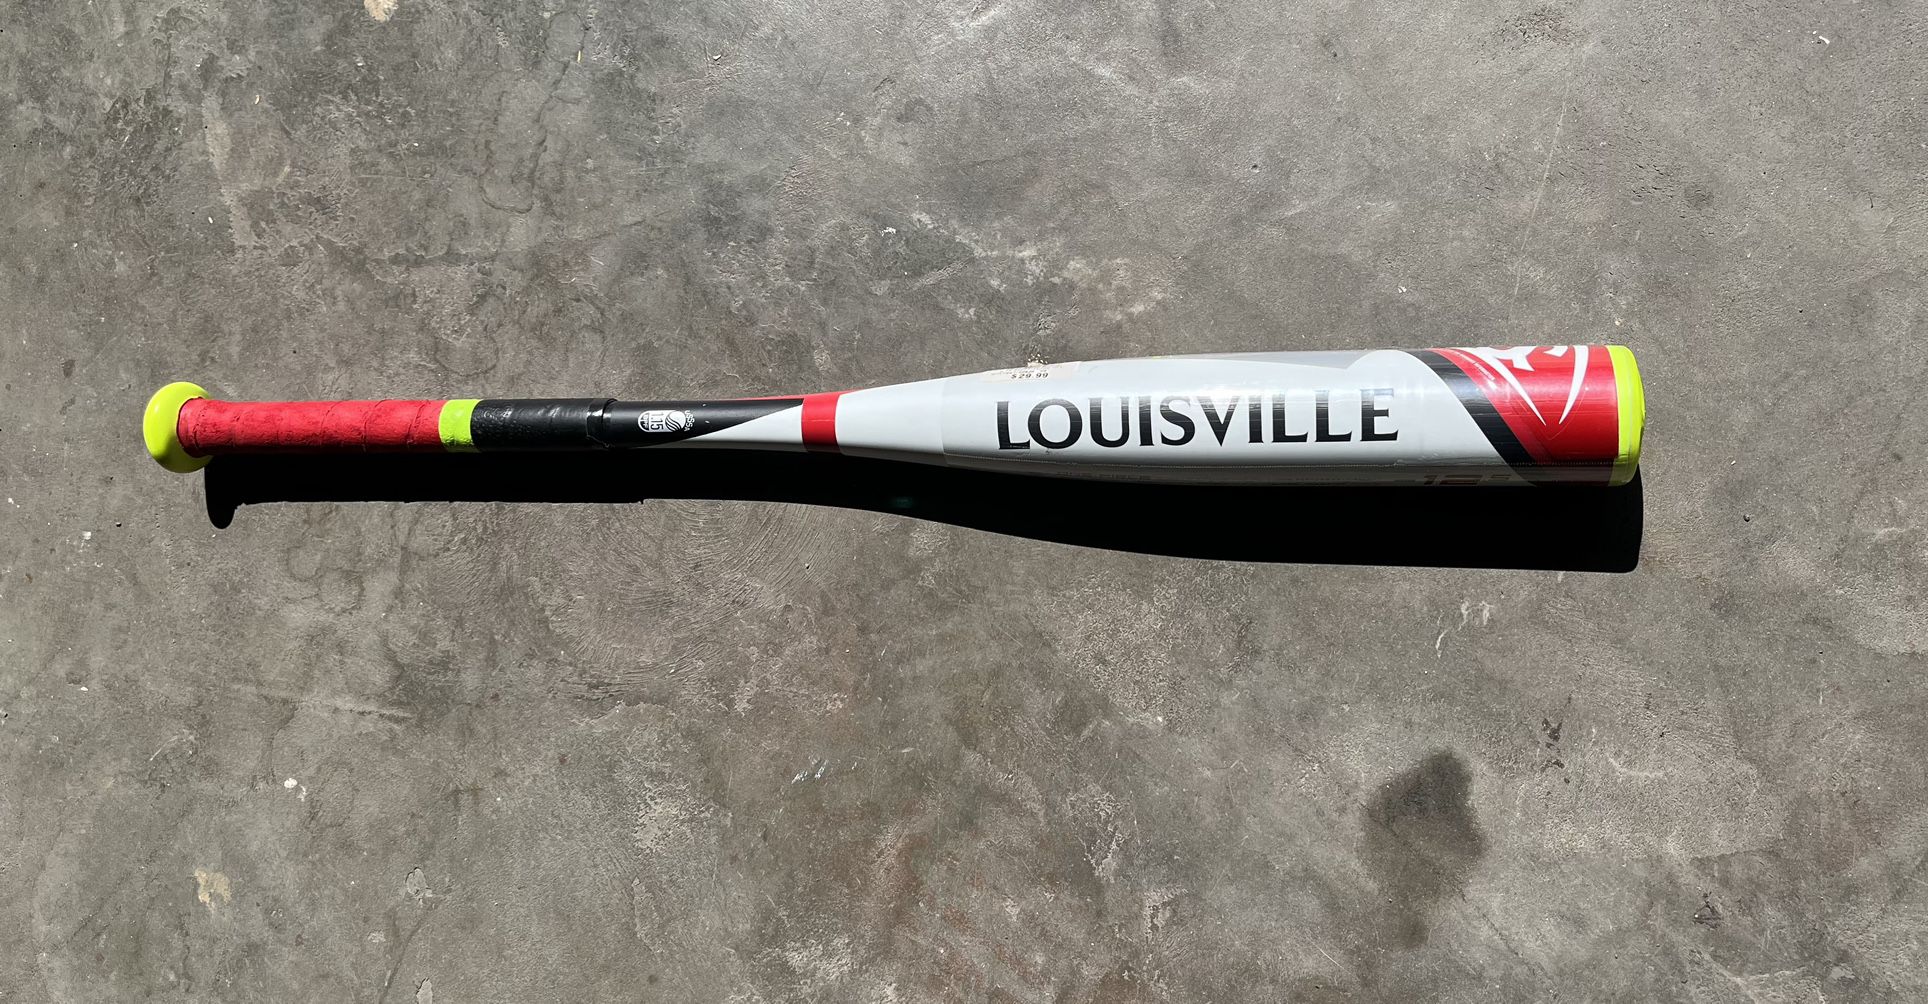 Brand New Louisville Slugger Baseball Bat